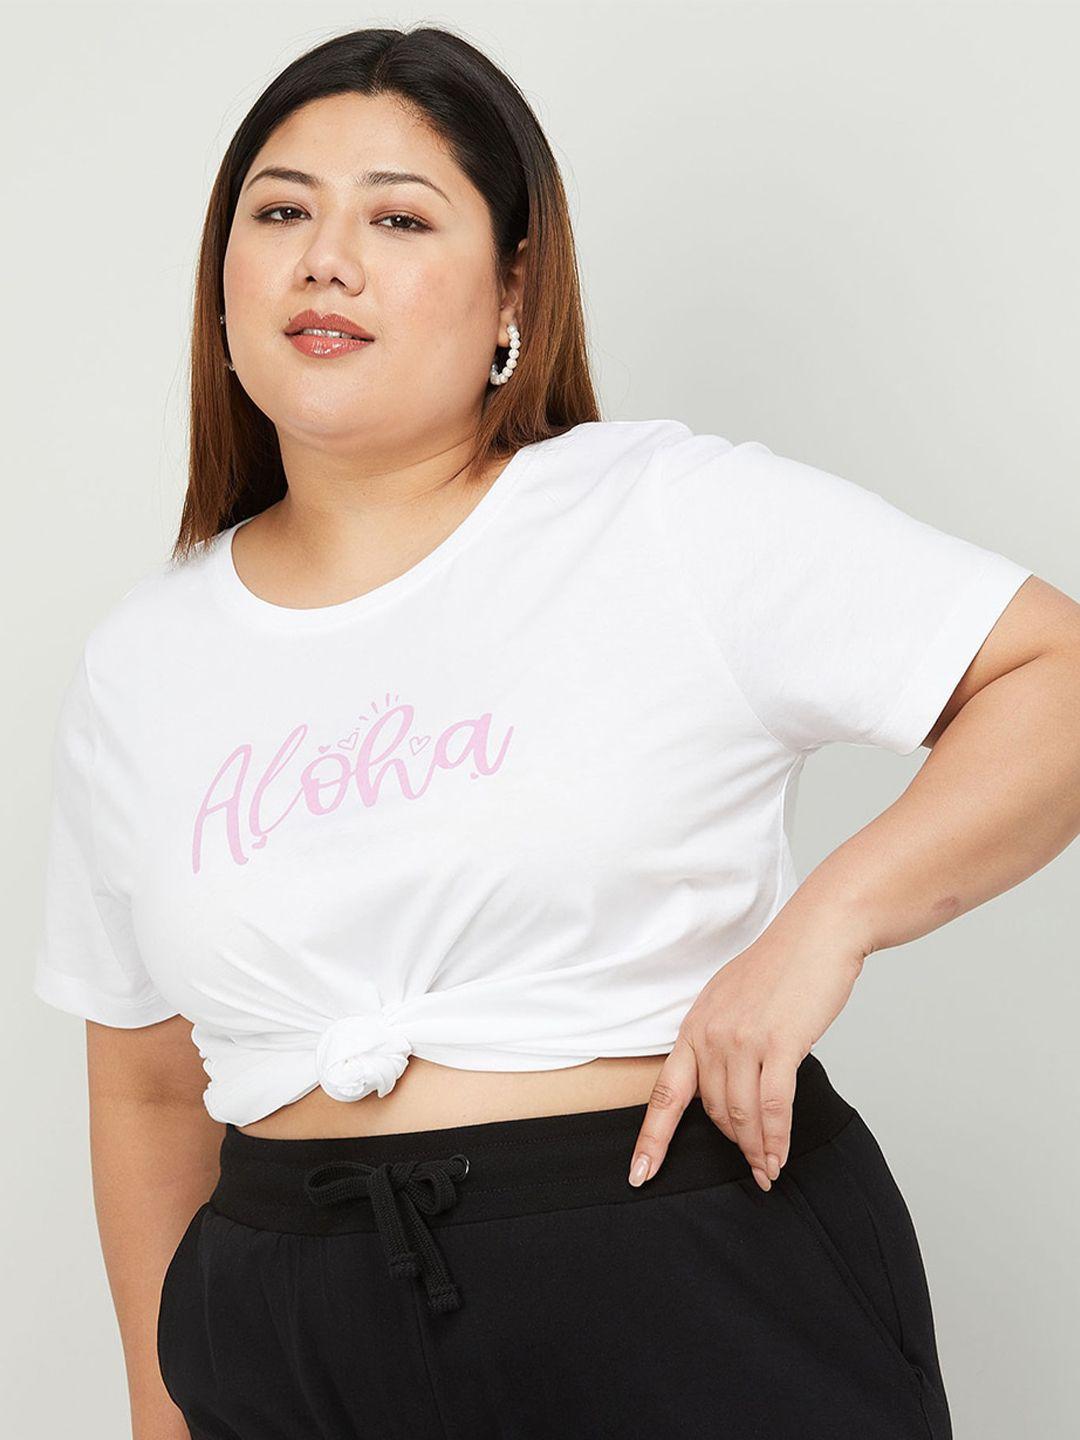 nexus-women-typography-printed-pure-cotton-plus-size-t-shirt